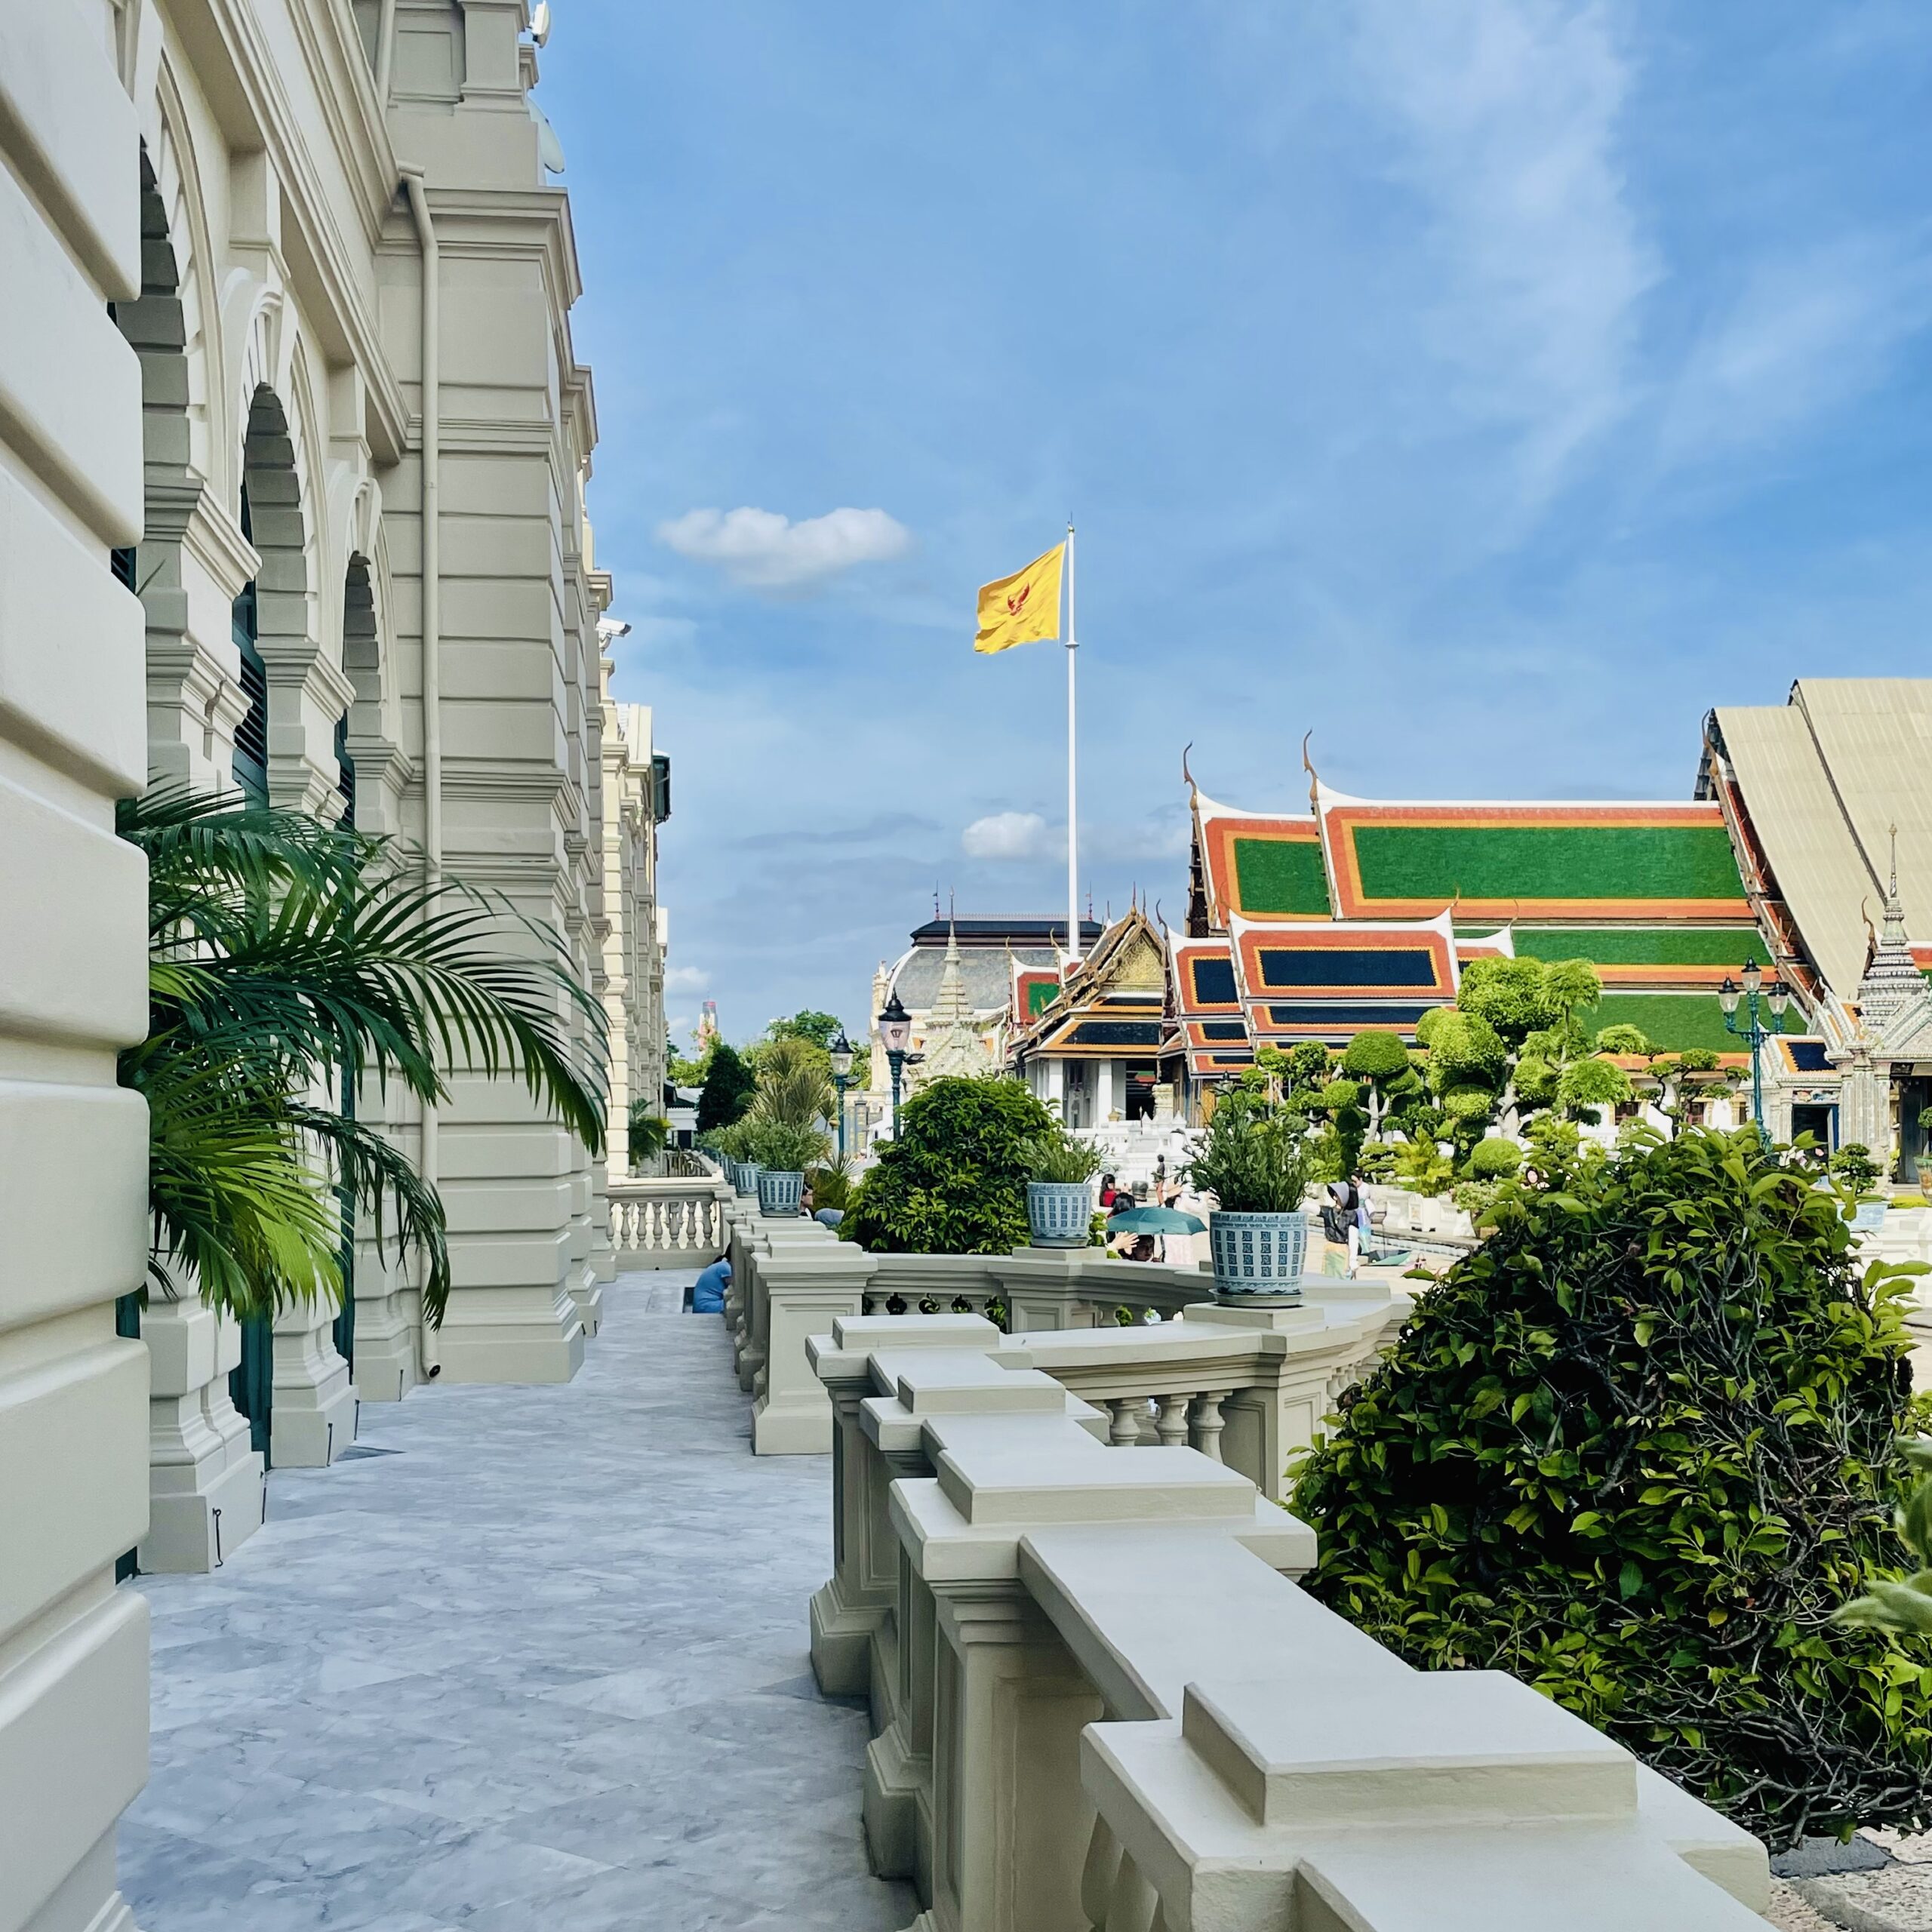 Grand Palace à Bangkok en Thaïlande